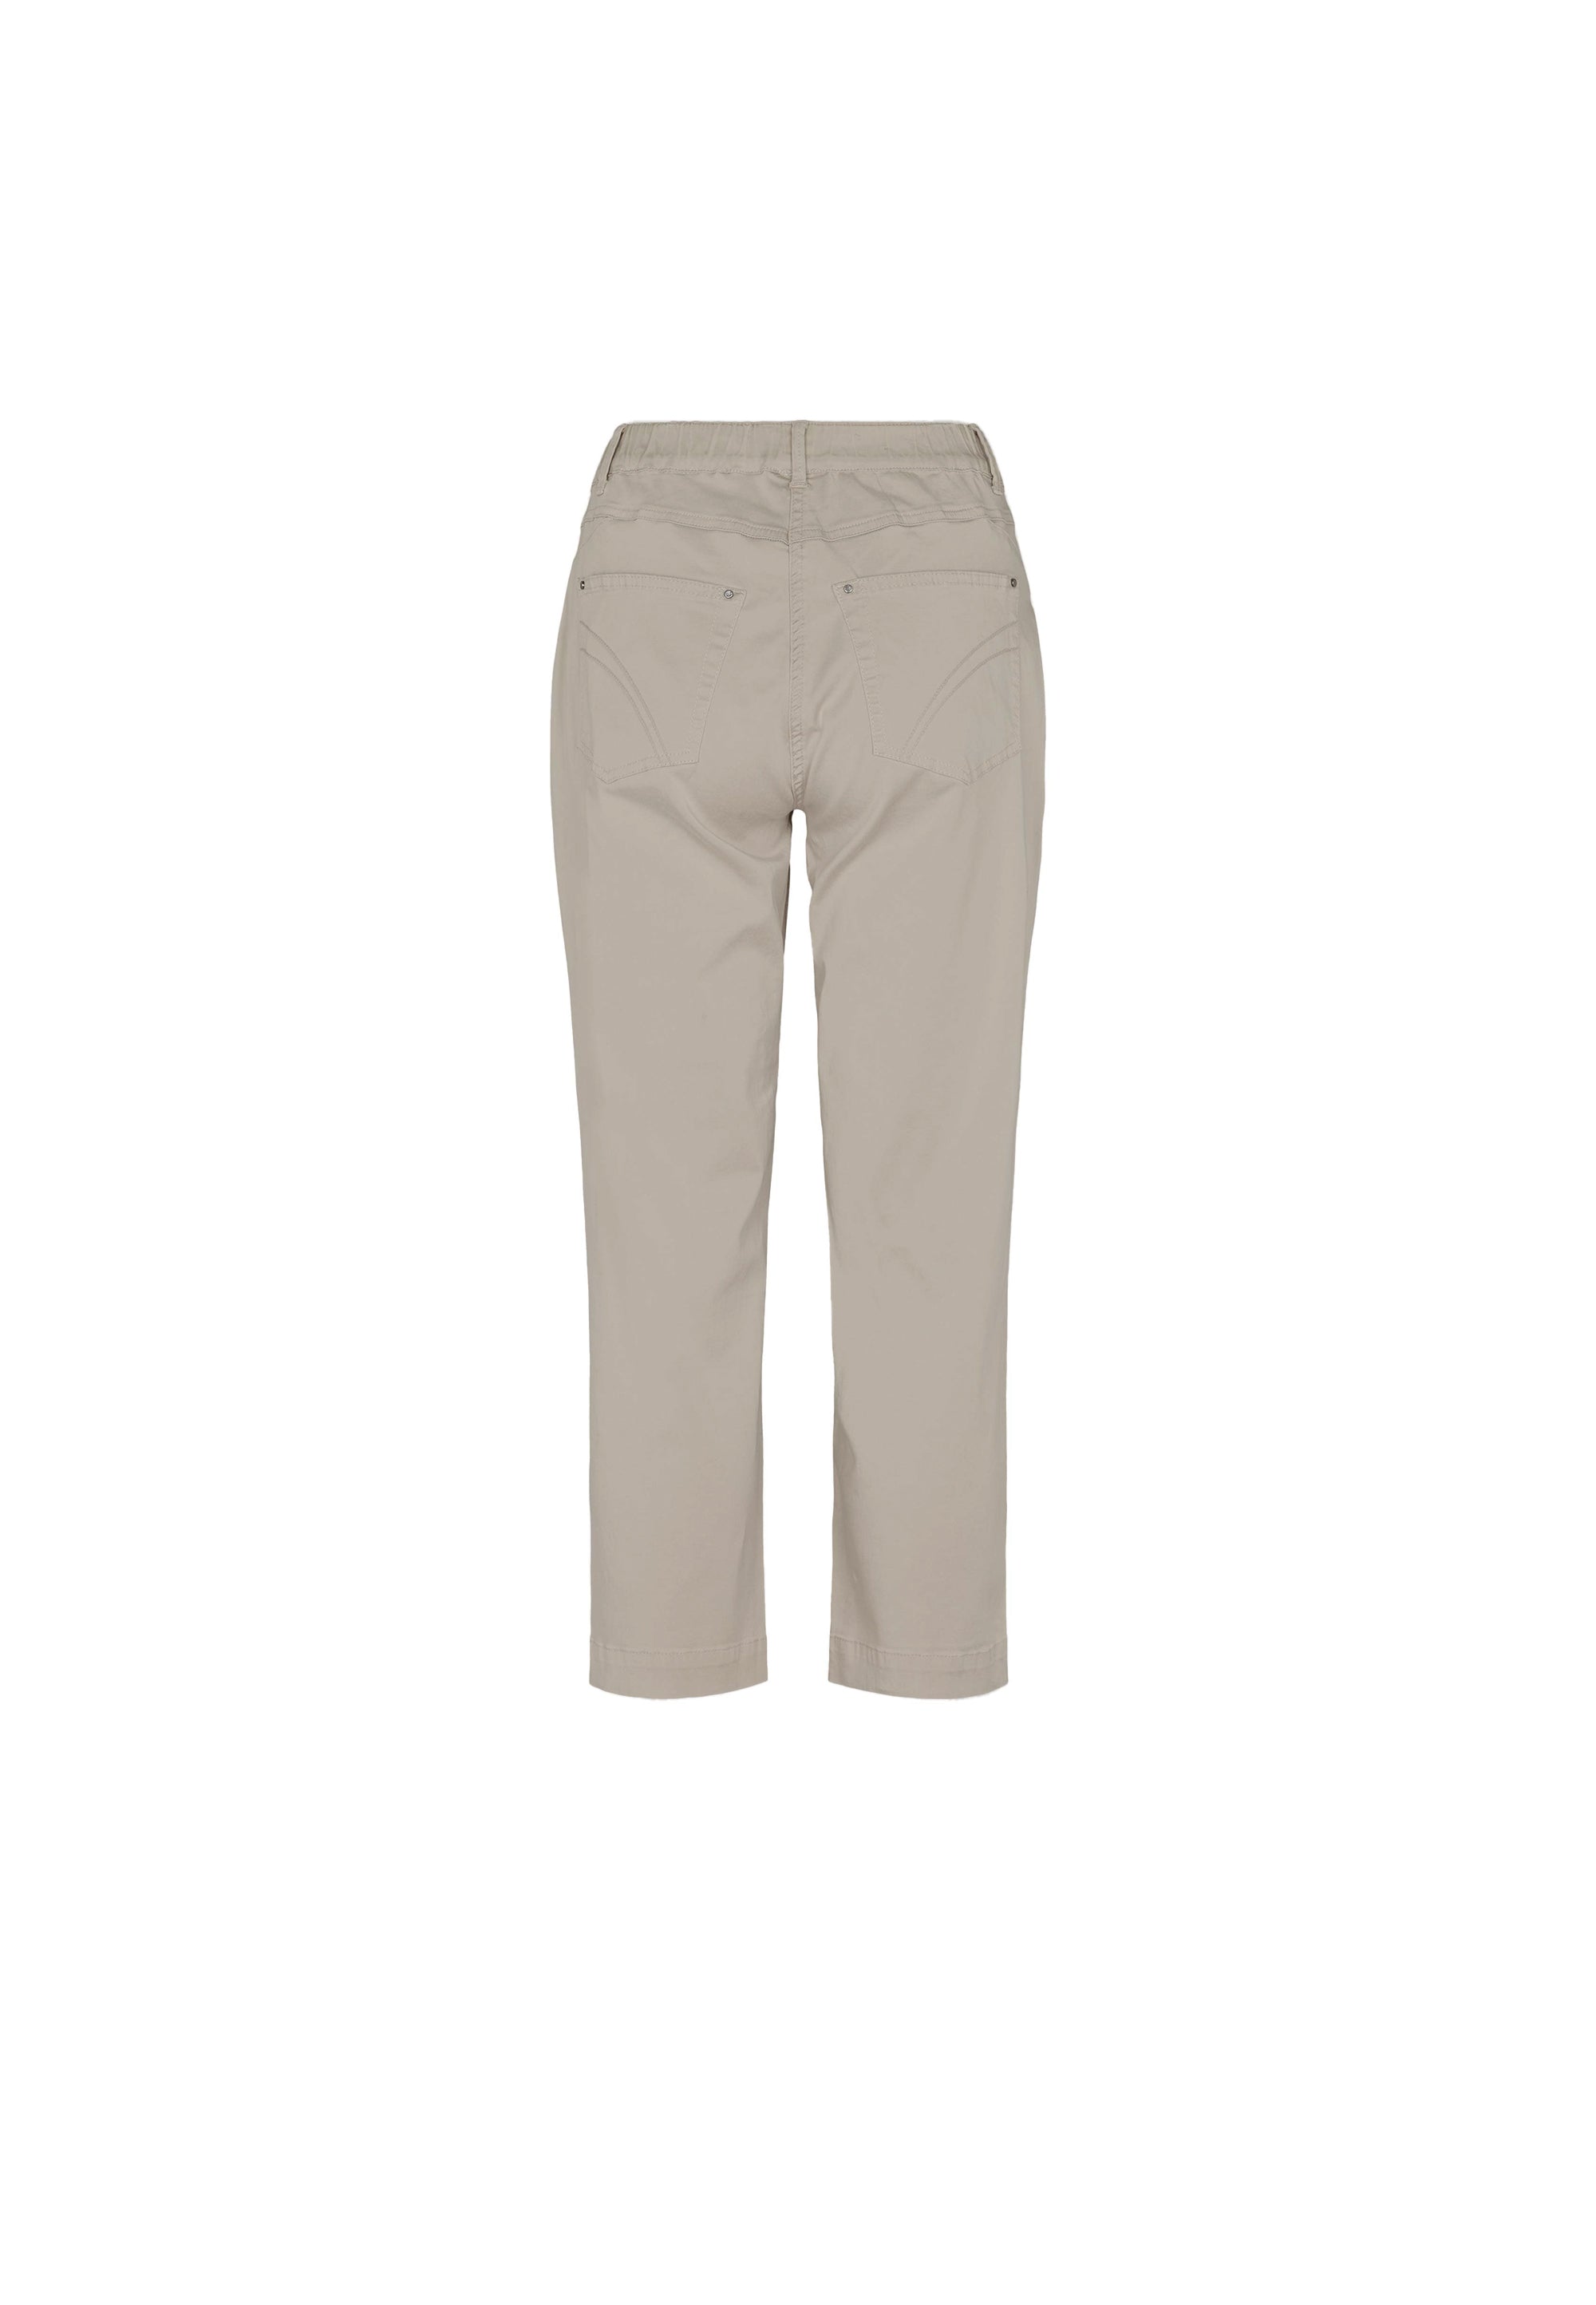 LAURIE Hannah Regular Crop Trousers REGULAR 25102 Grey Sand